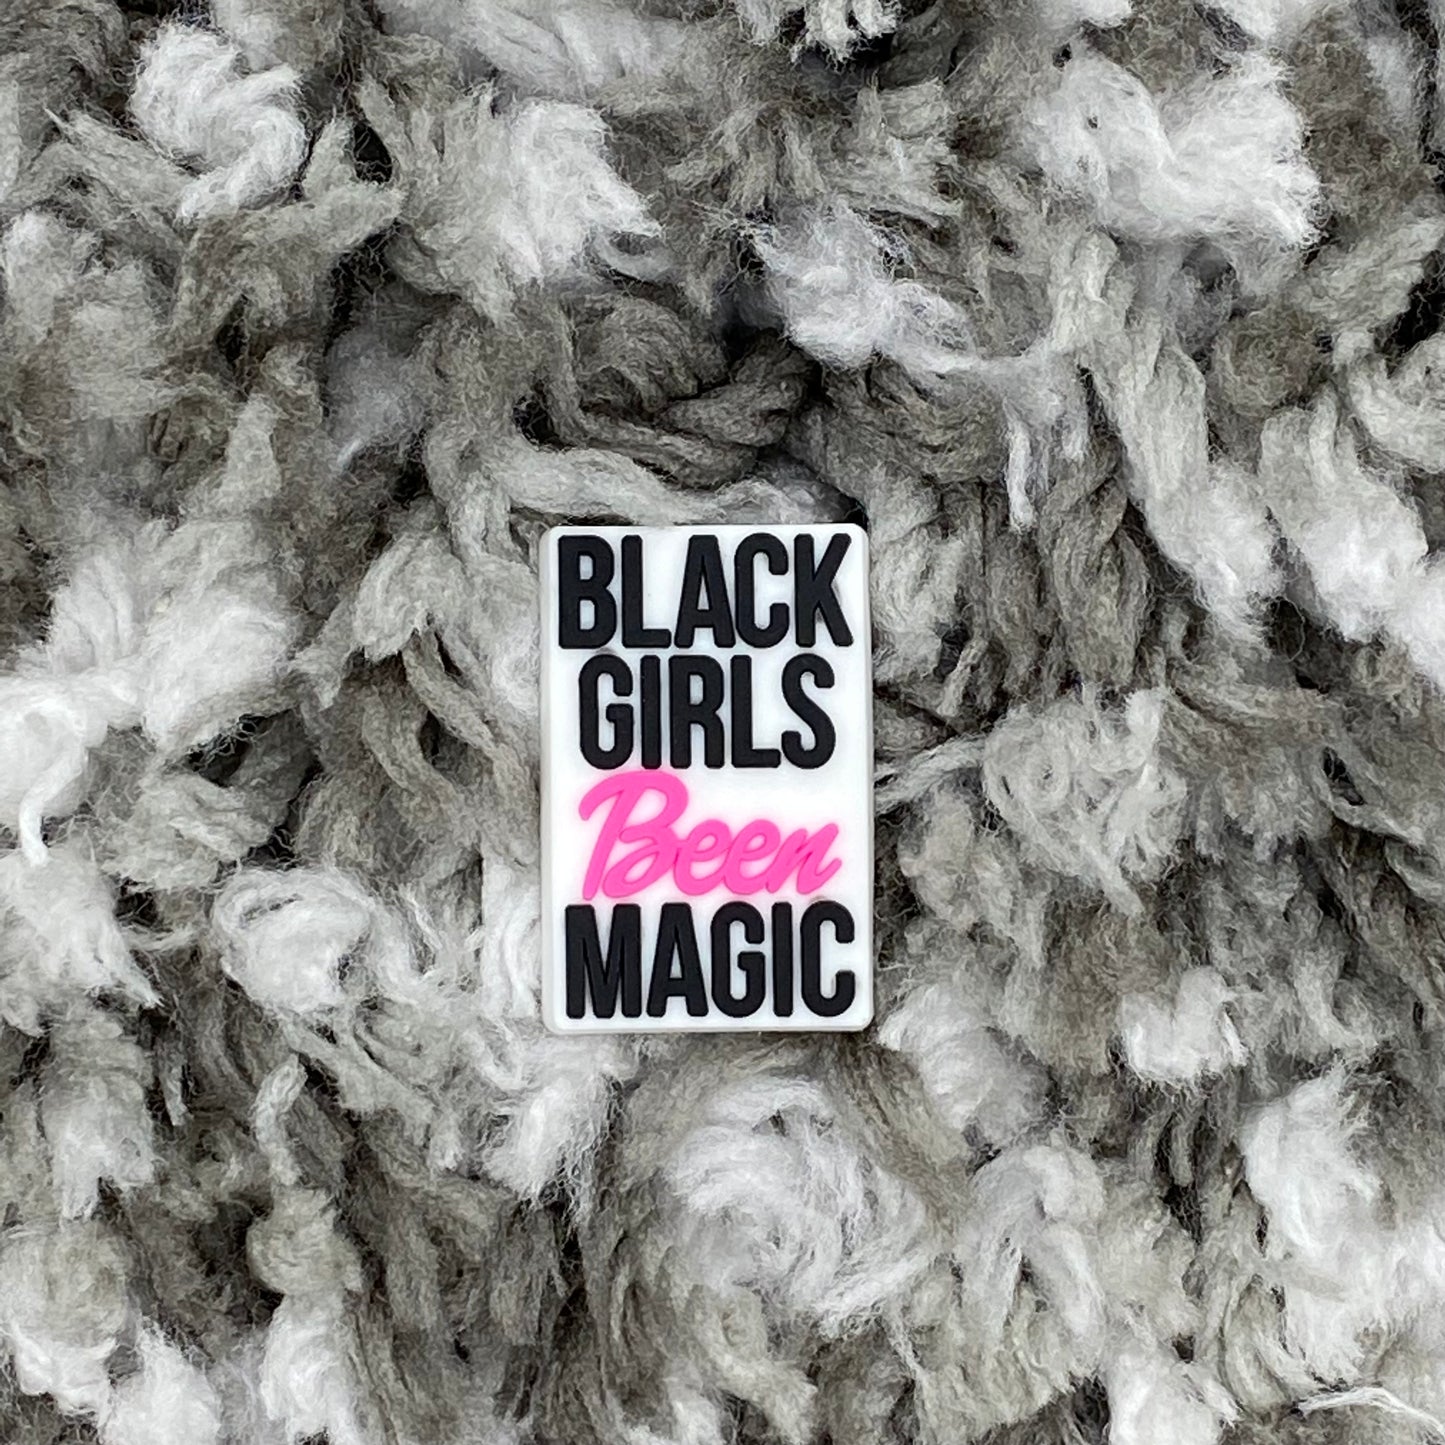 Black girls been magic